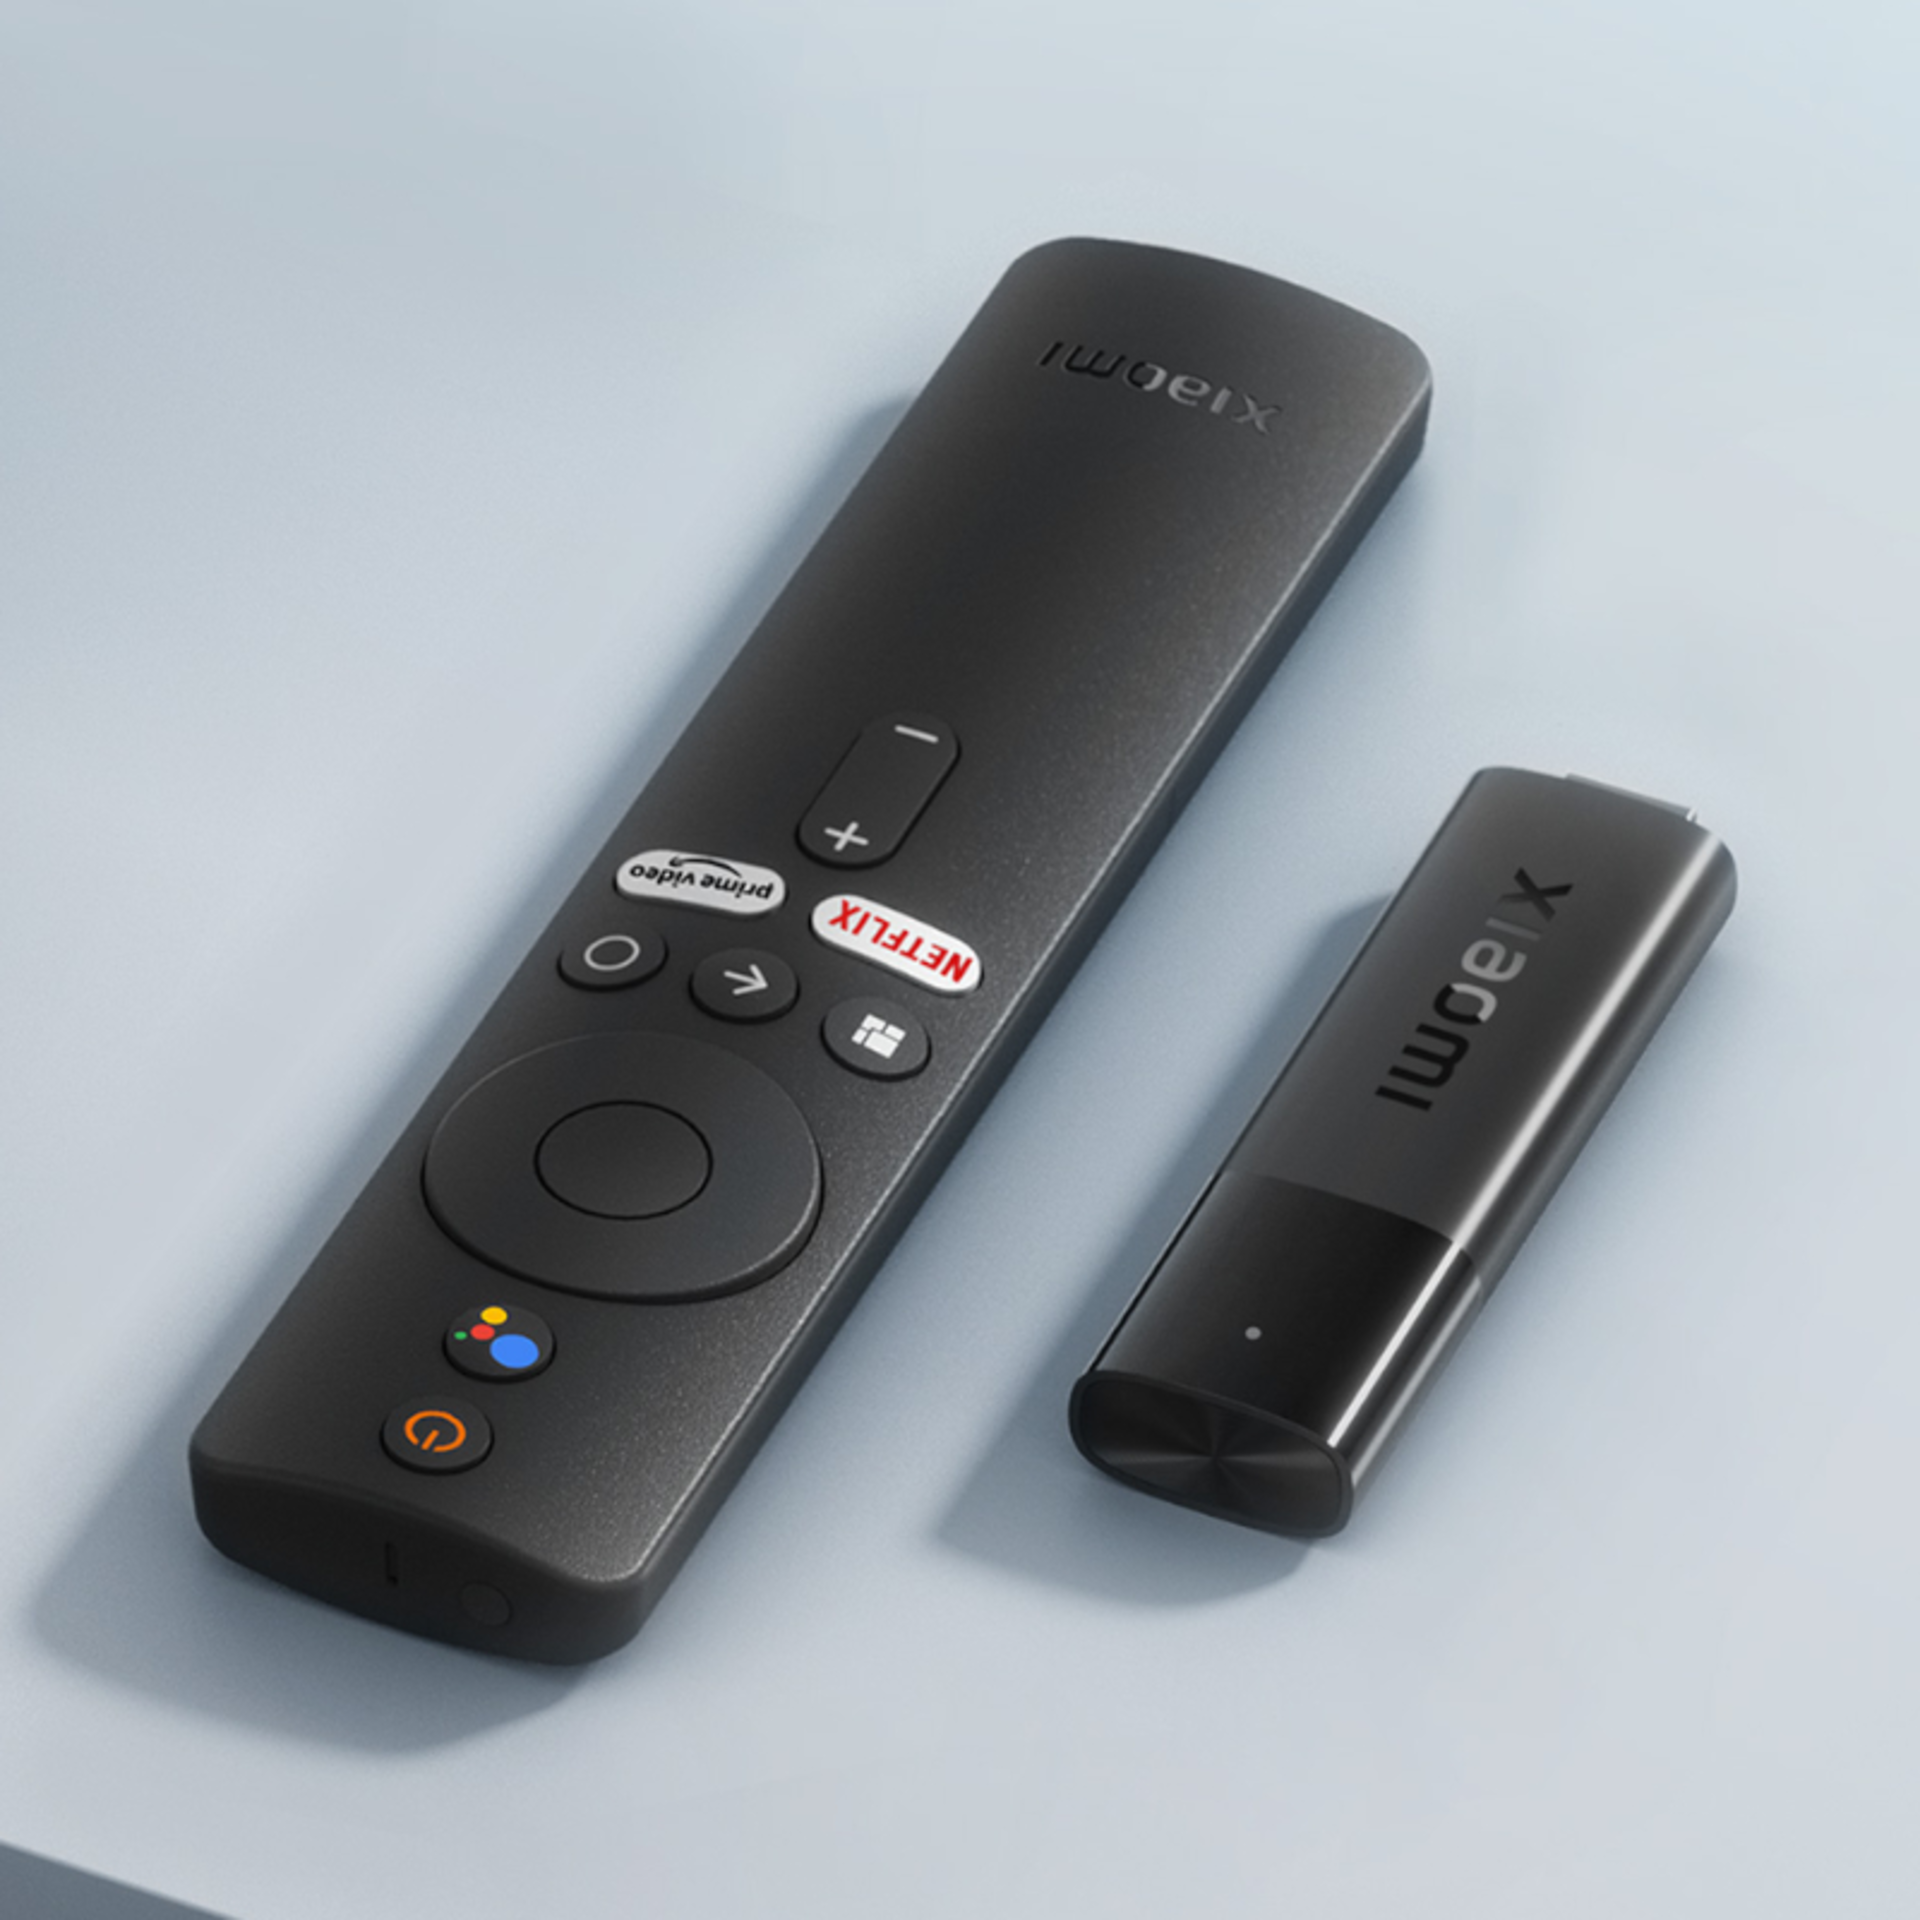 Xiaomi Mi TV Stick Media Player - HiFi Corporation